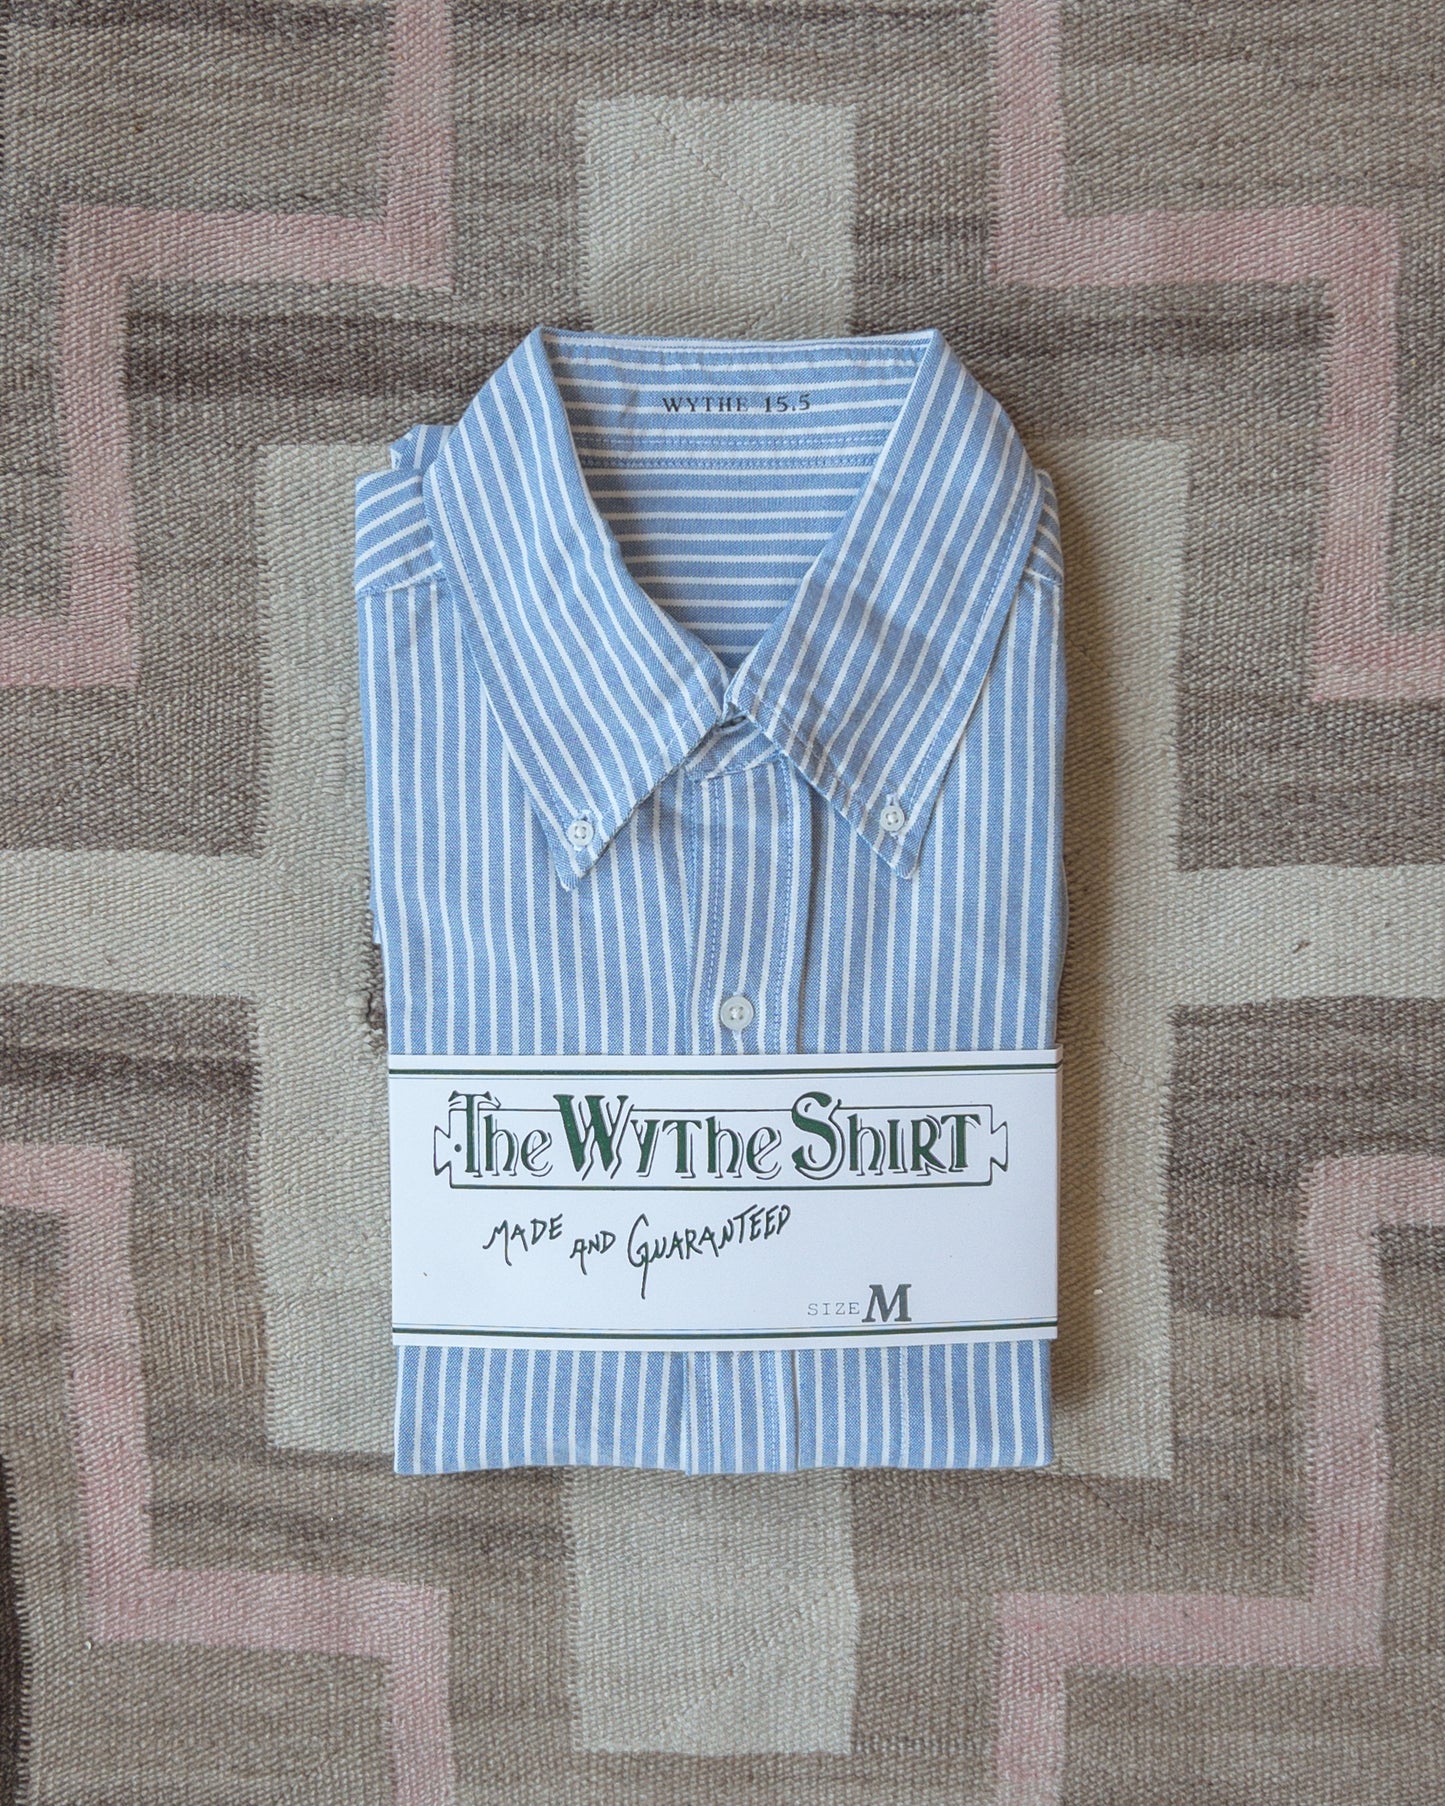 *NEW* Oxford Cloth Button Down - Blue and White Stripe